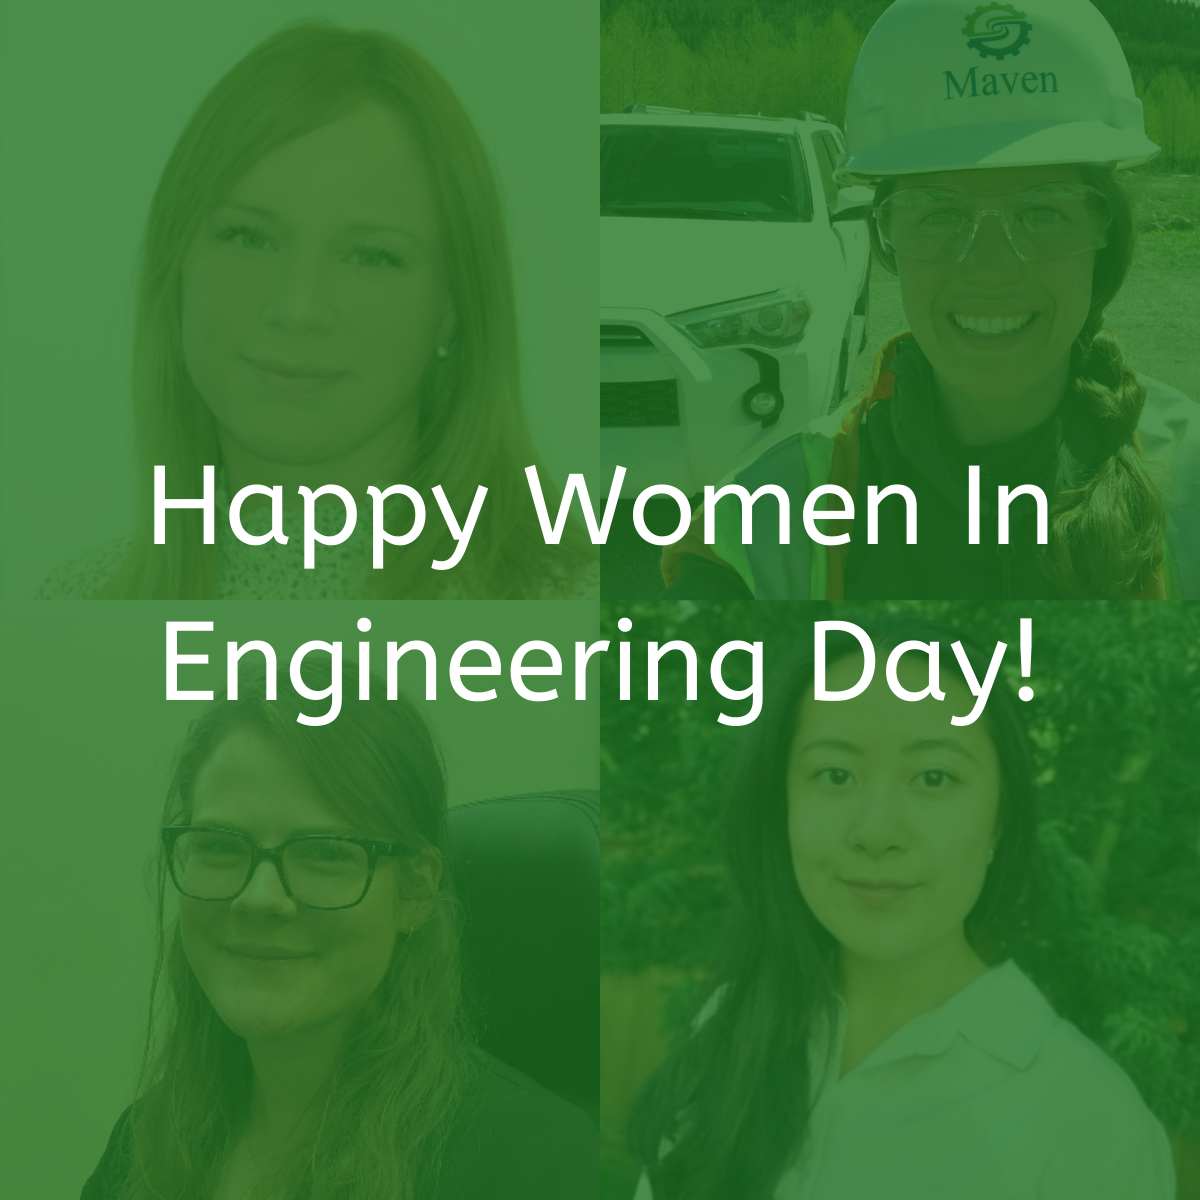 Engineering Day 2021 – Celebrating Women